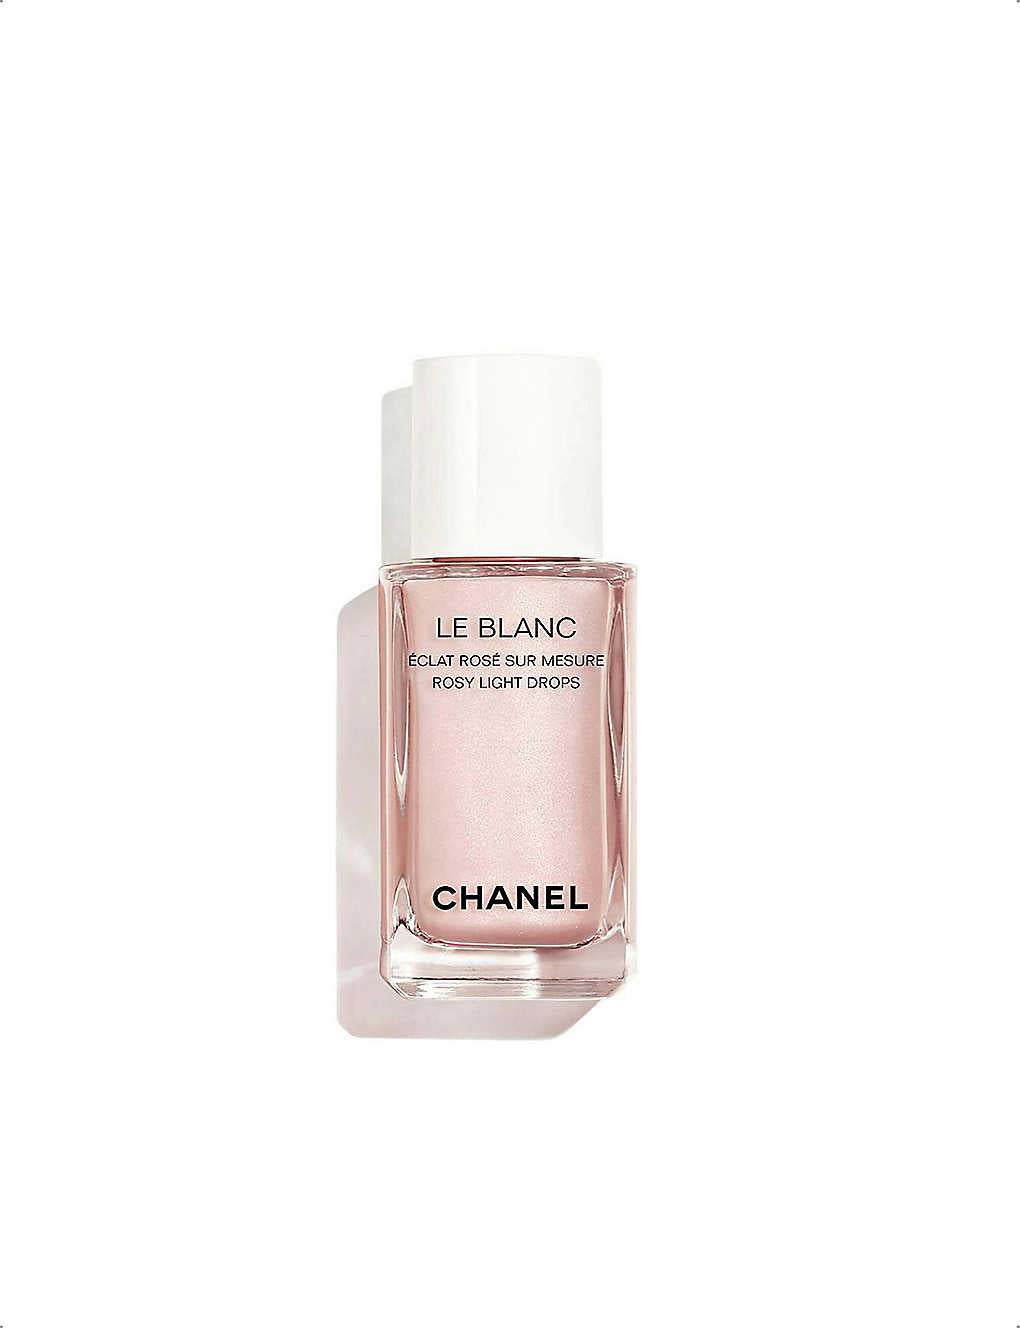 Chanel Healthy Glow Highlighting Fluid v. Rosy Light Drops 